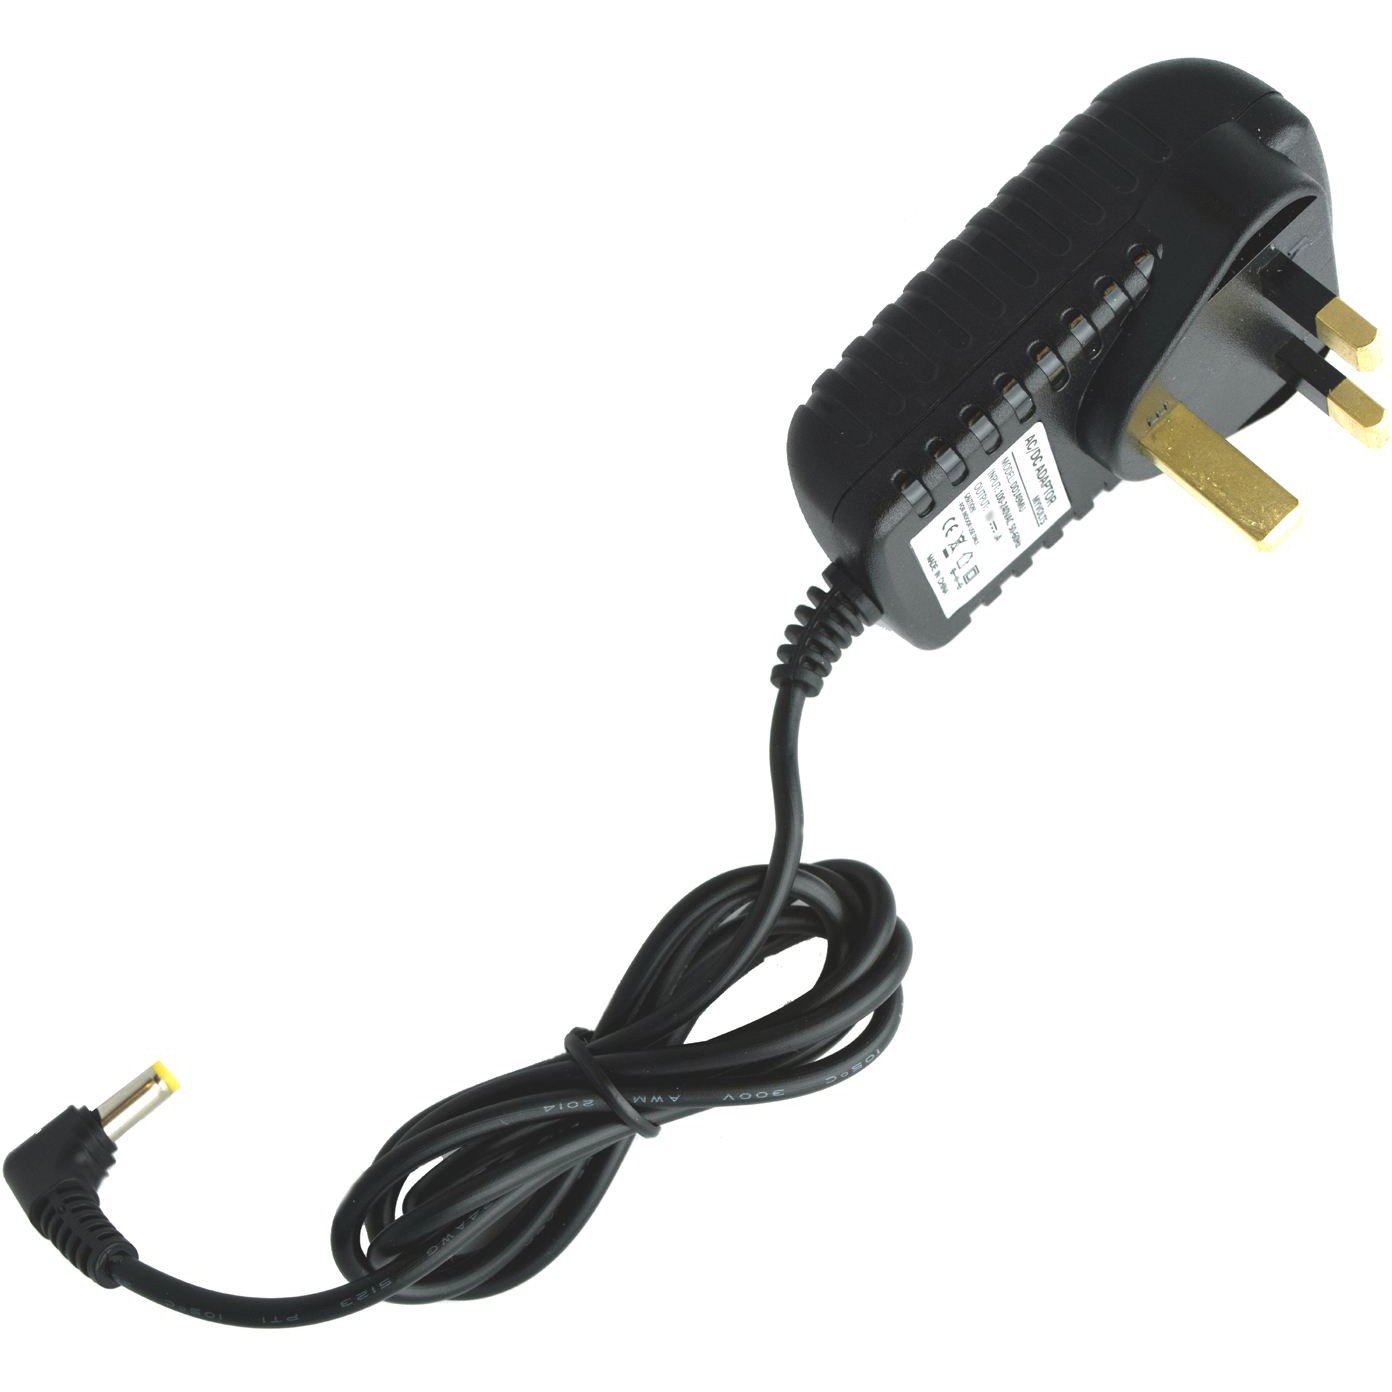 Original Dymo Charging Adapter Dymo Charging Adapter (S0895900)